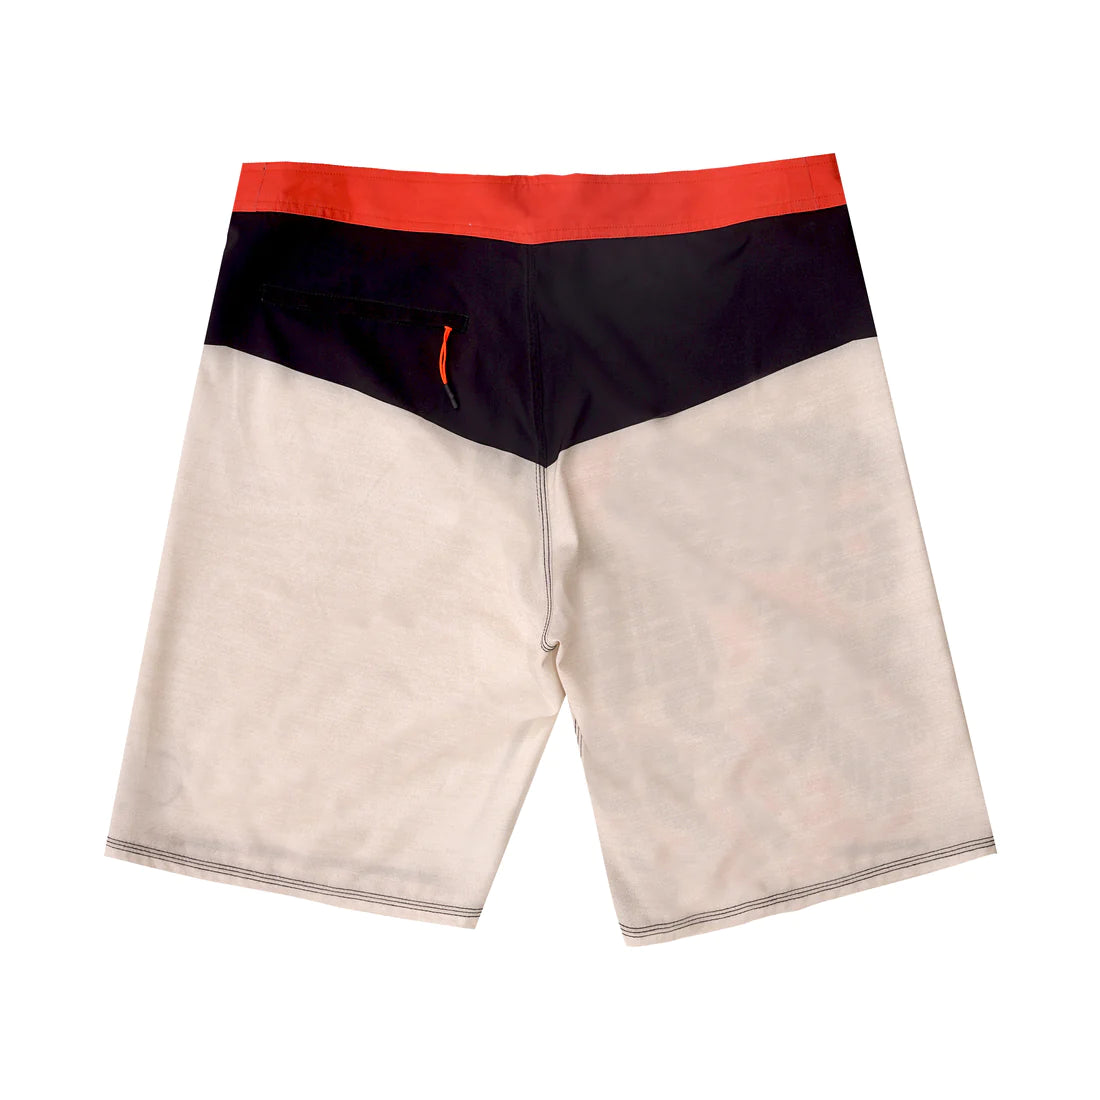 orange swim shorts for men